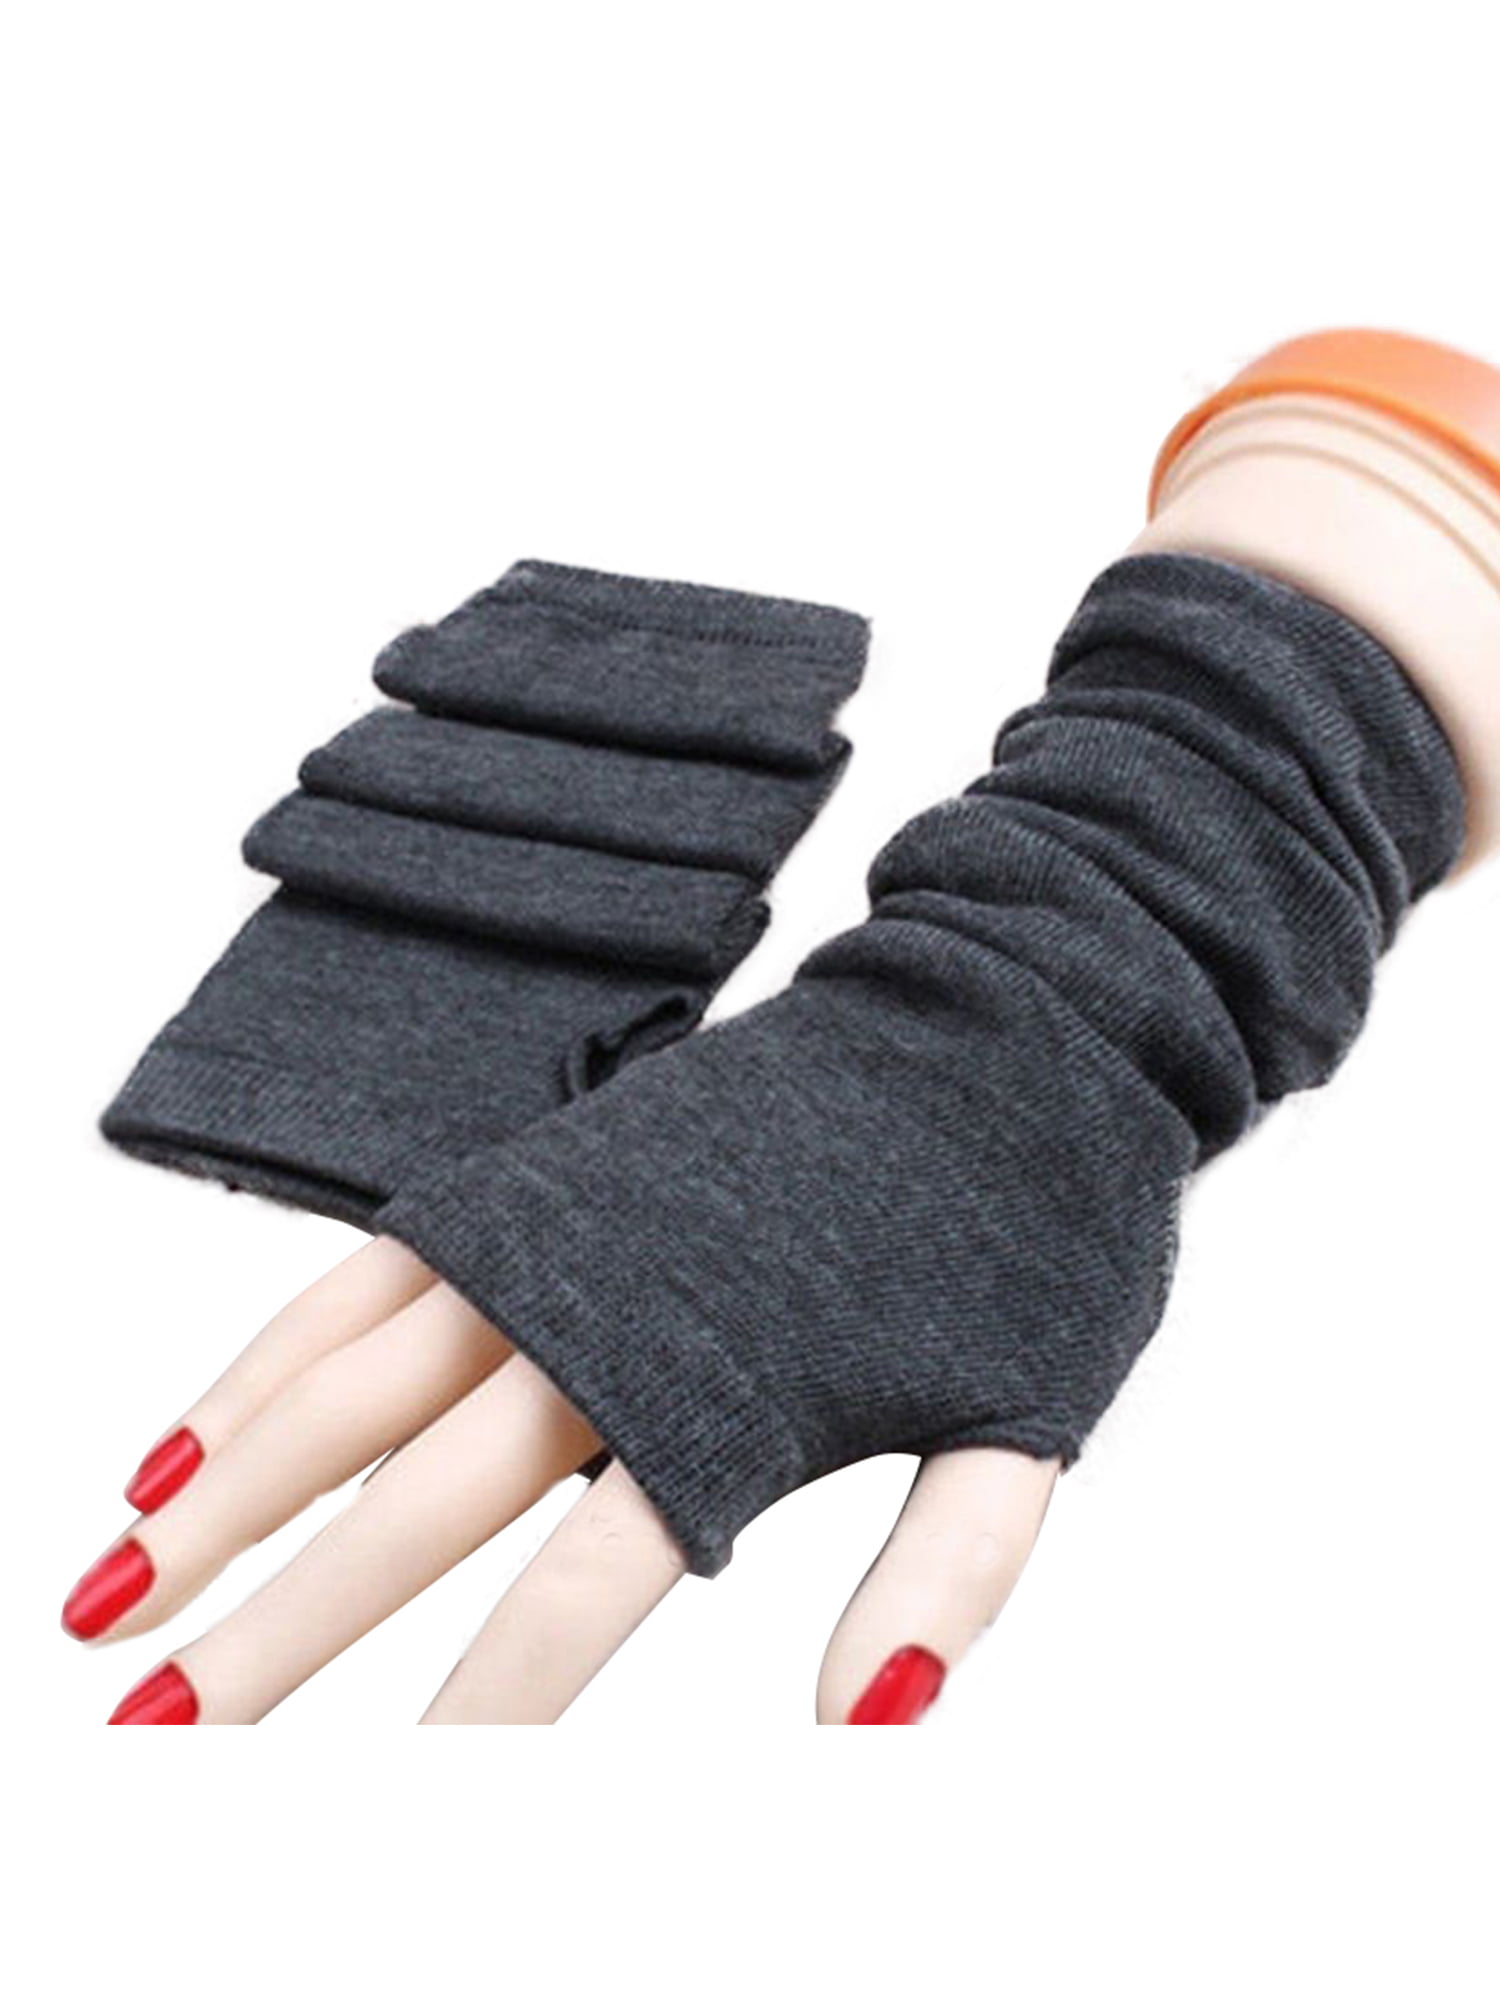 X Long black spandex fingerless gloves lace trim arm warmers